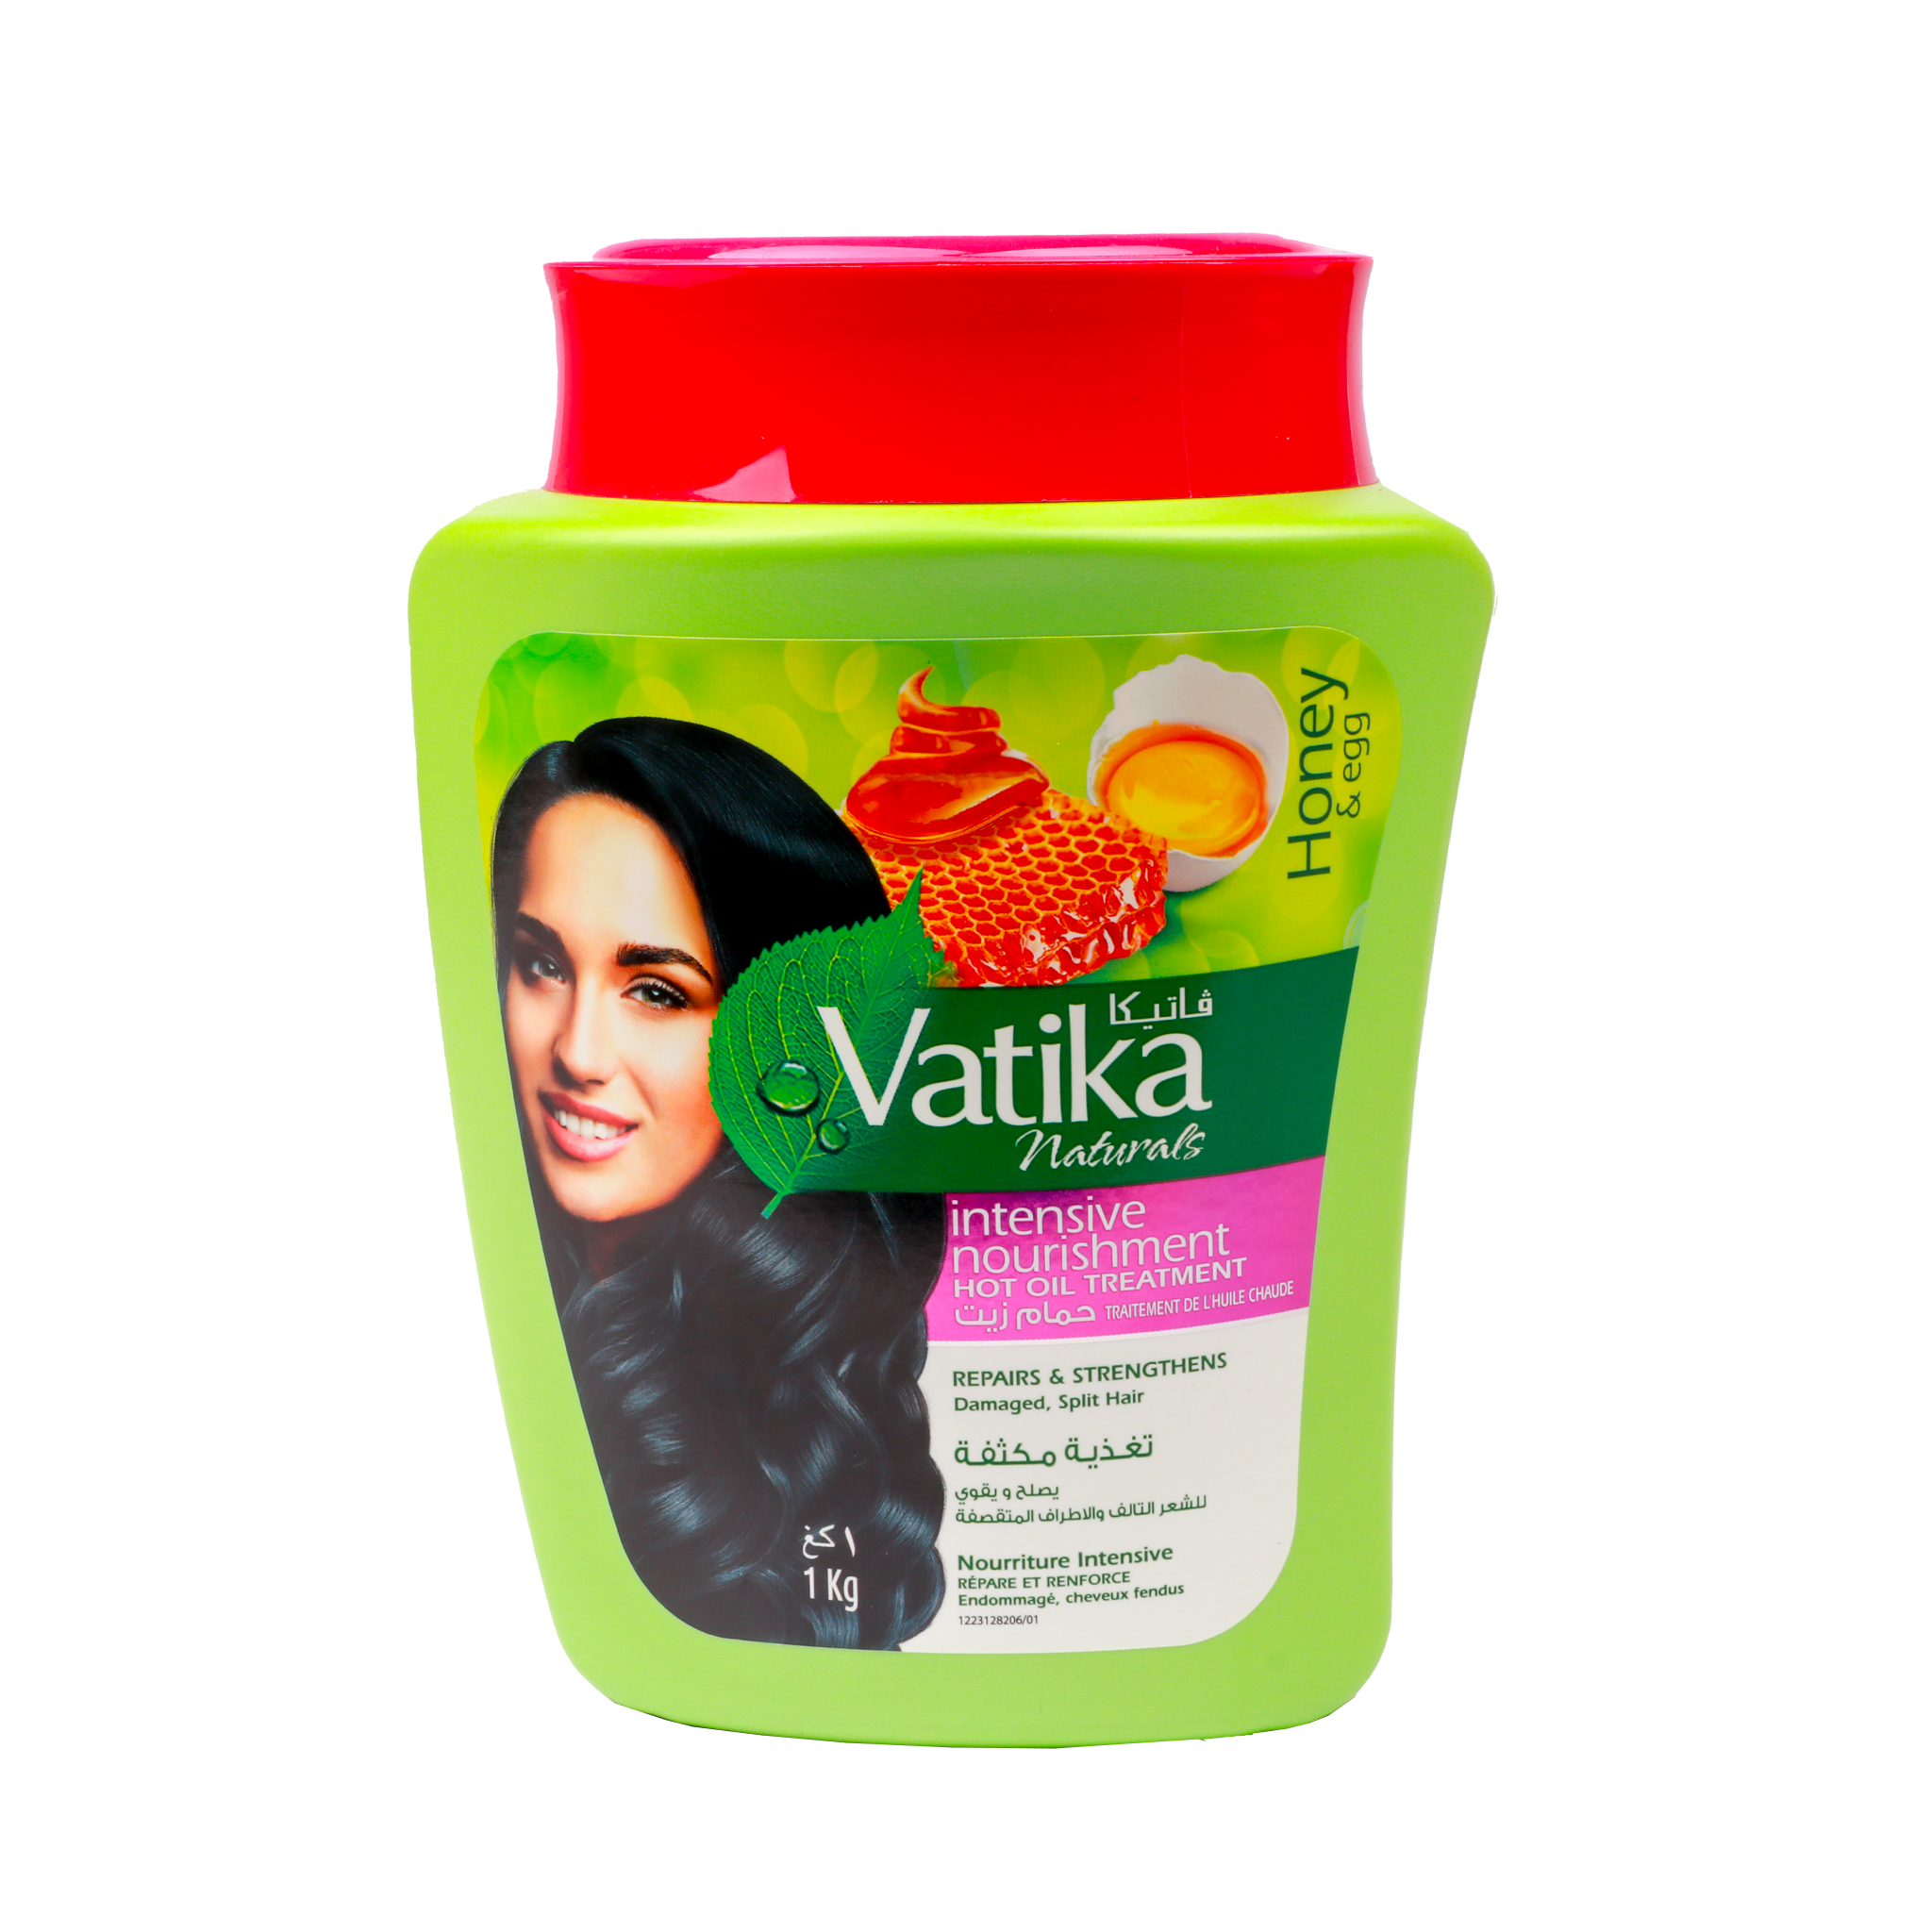 Vatika Intensive Nourishment Hot Oil Treatment 1Kg